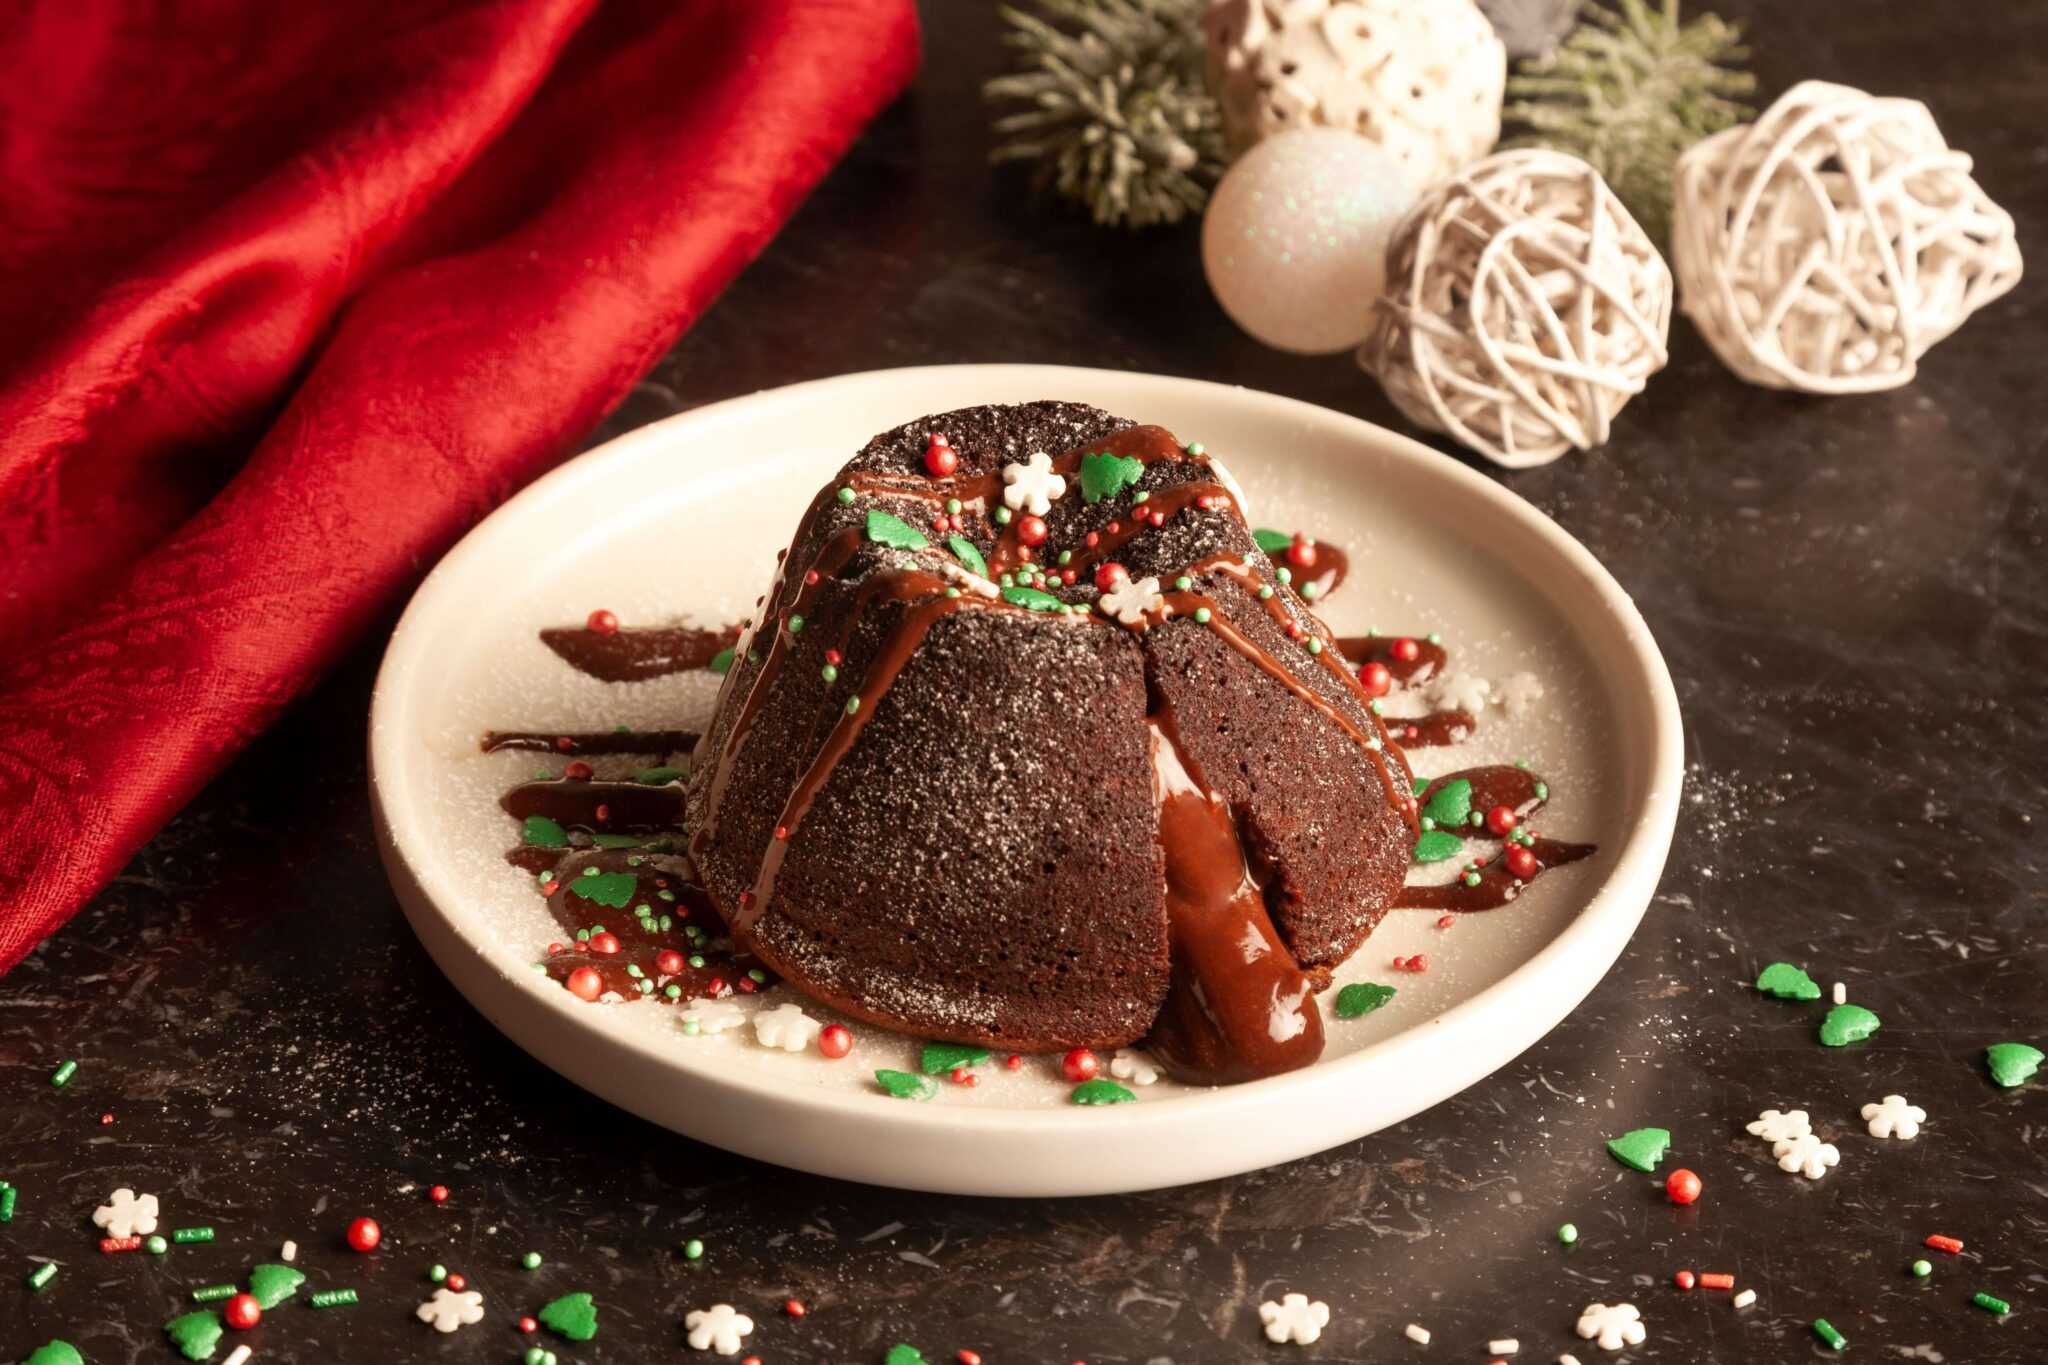 moelleux-σοκολάτας:-Το-γλυκό-των-γιορτών-που-τρως-και-ξανατρώς-χωρίς-να-βαρεθείς-ποτέ